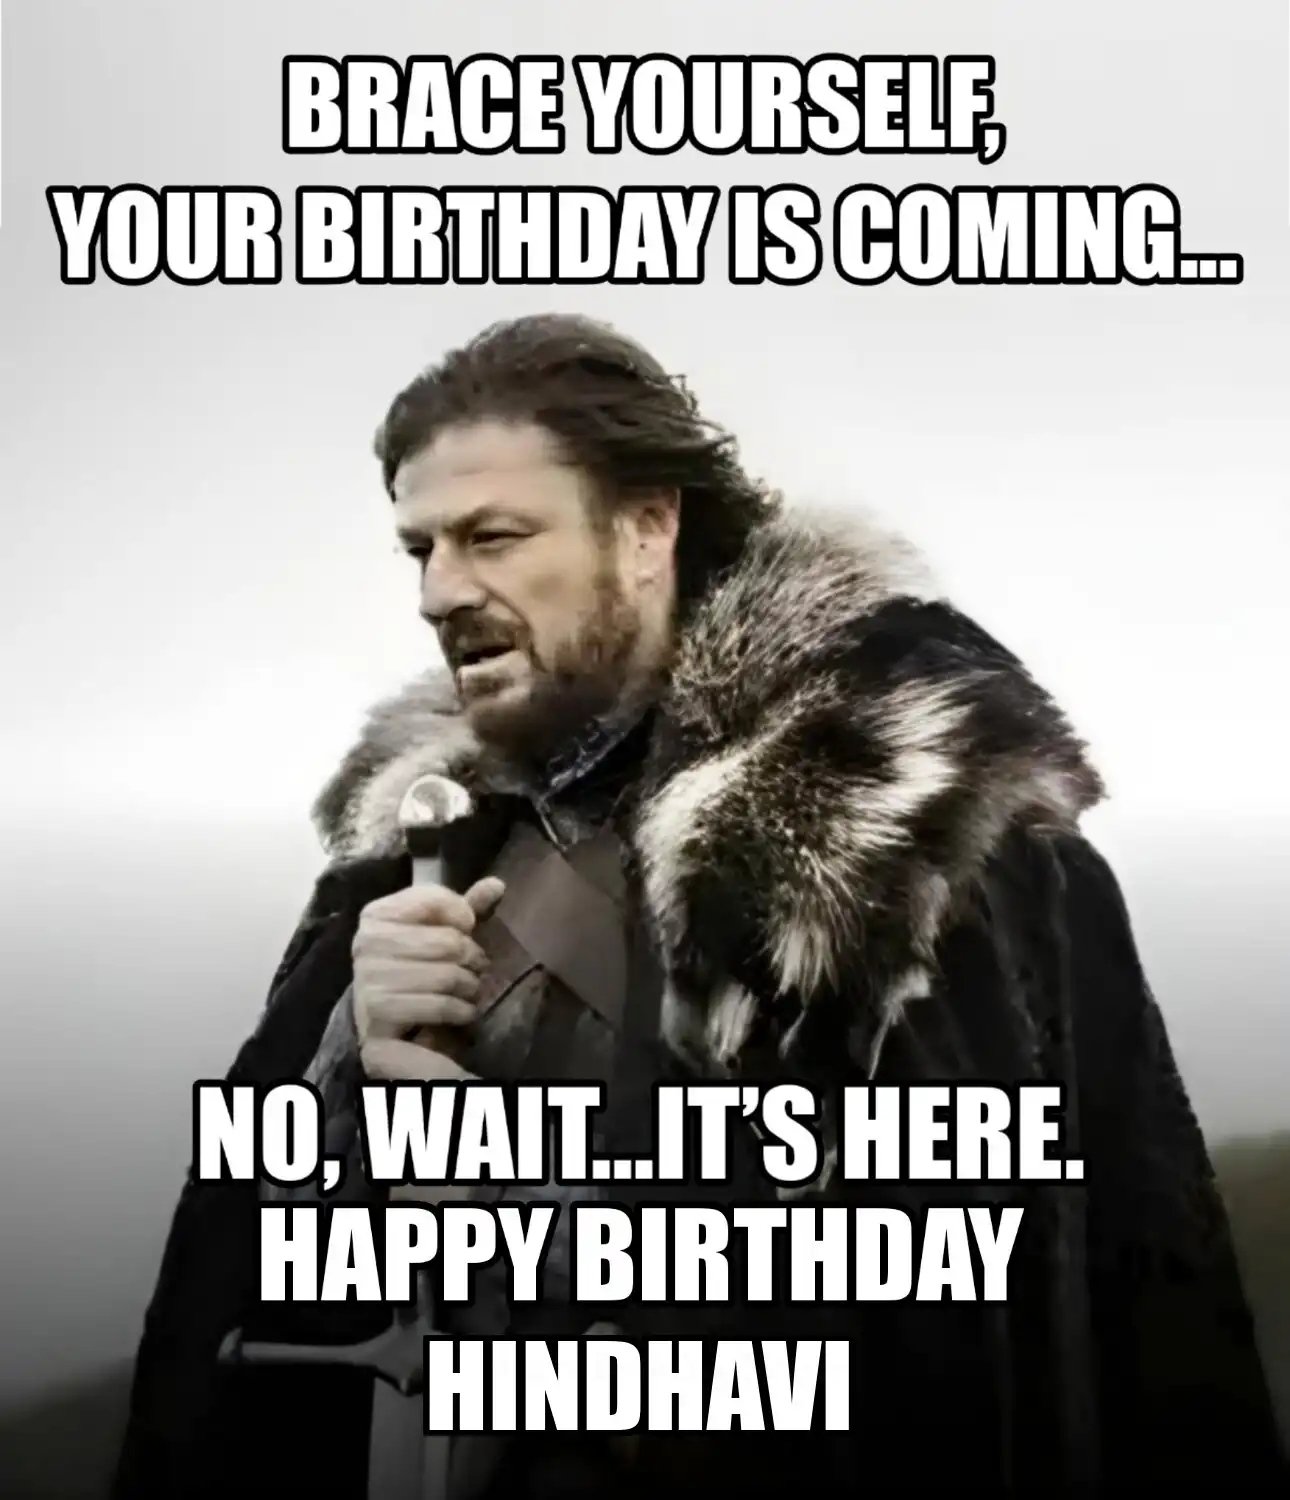 Happy Birthday Hindhavi Brace Yourself Your Birthday Is Coming Meme